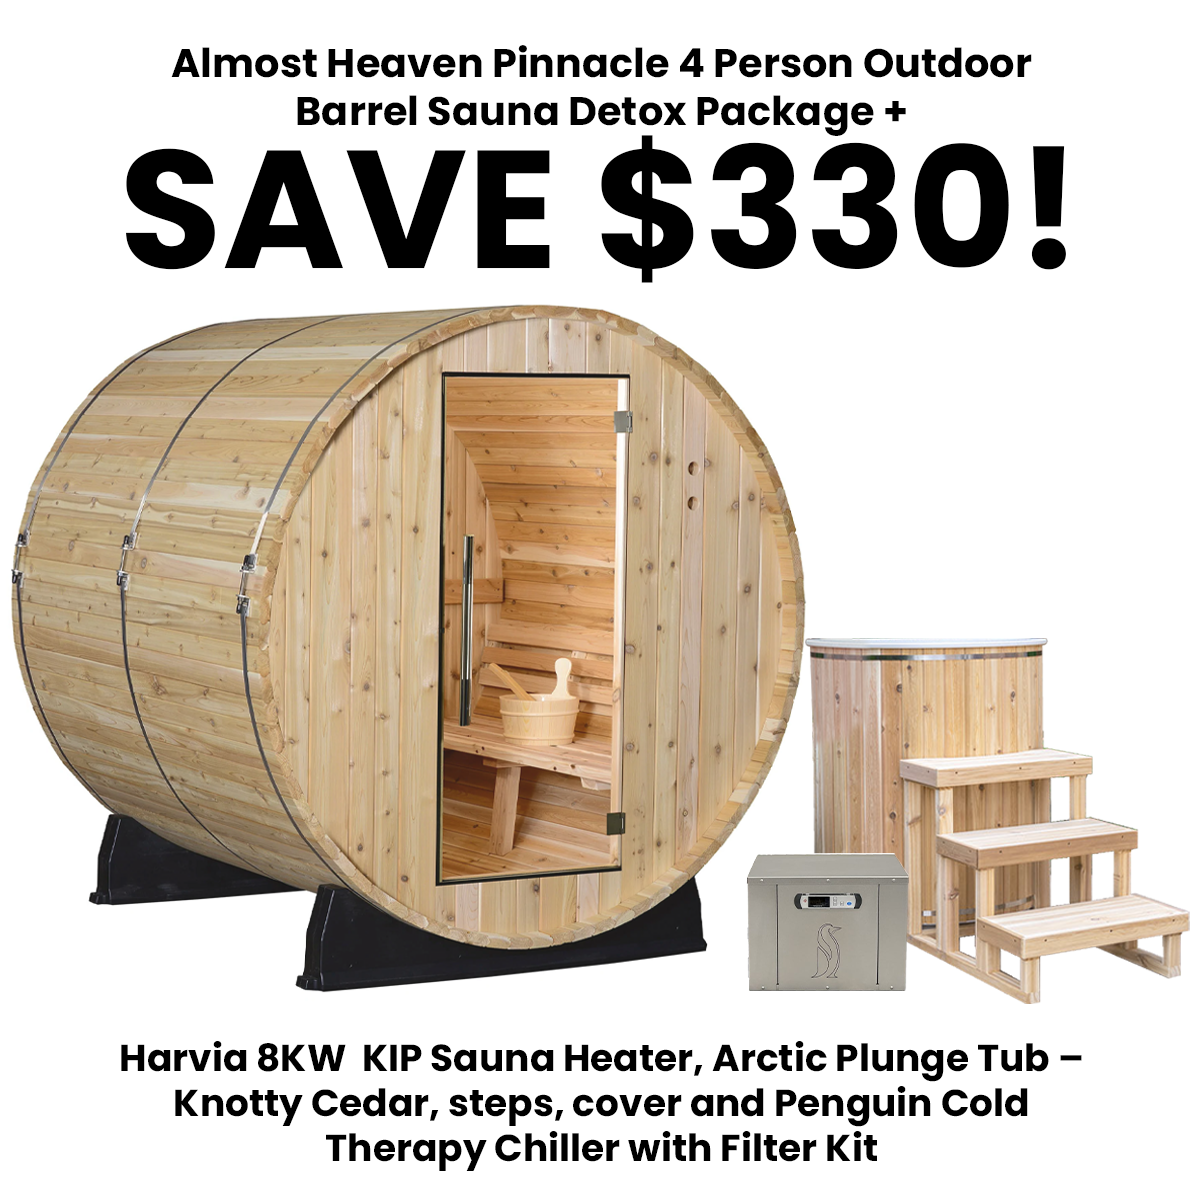 Almost Heaven Pinnacle 4 Person Outdoor Barrel Sauna Detox Package